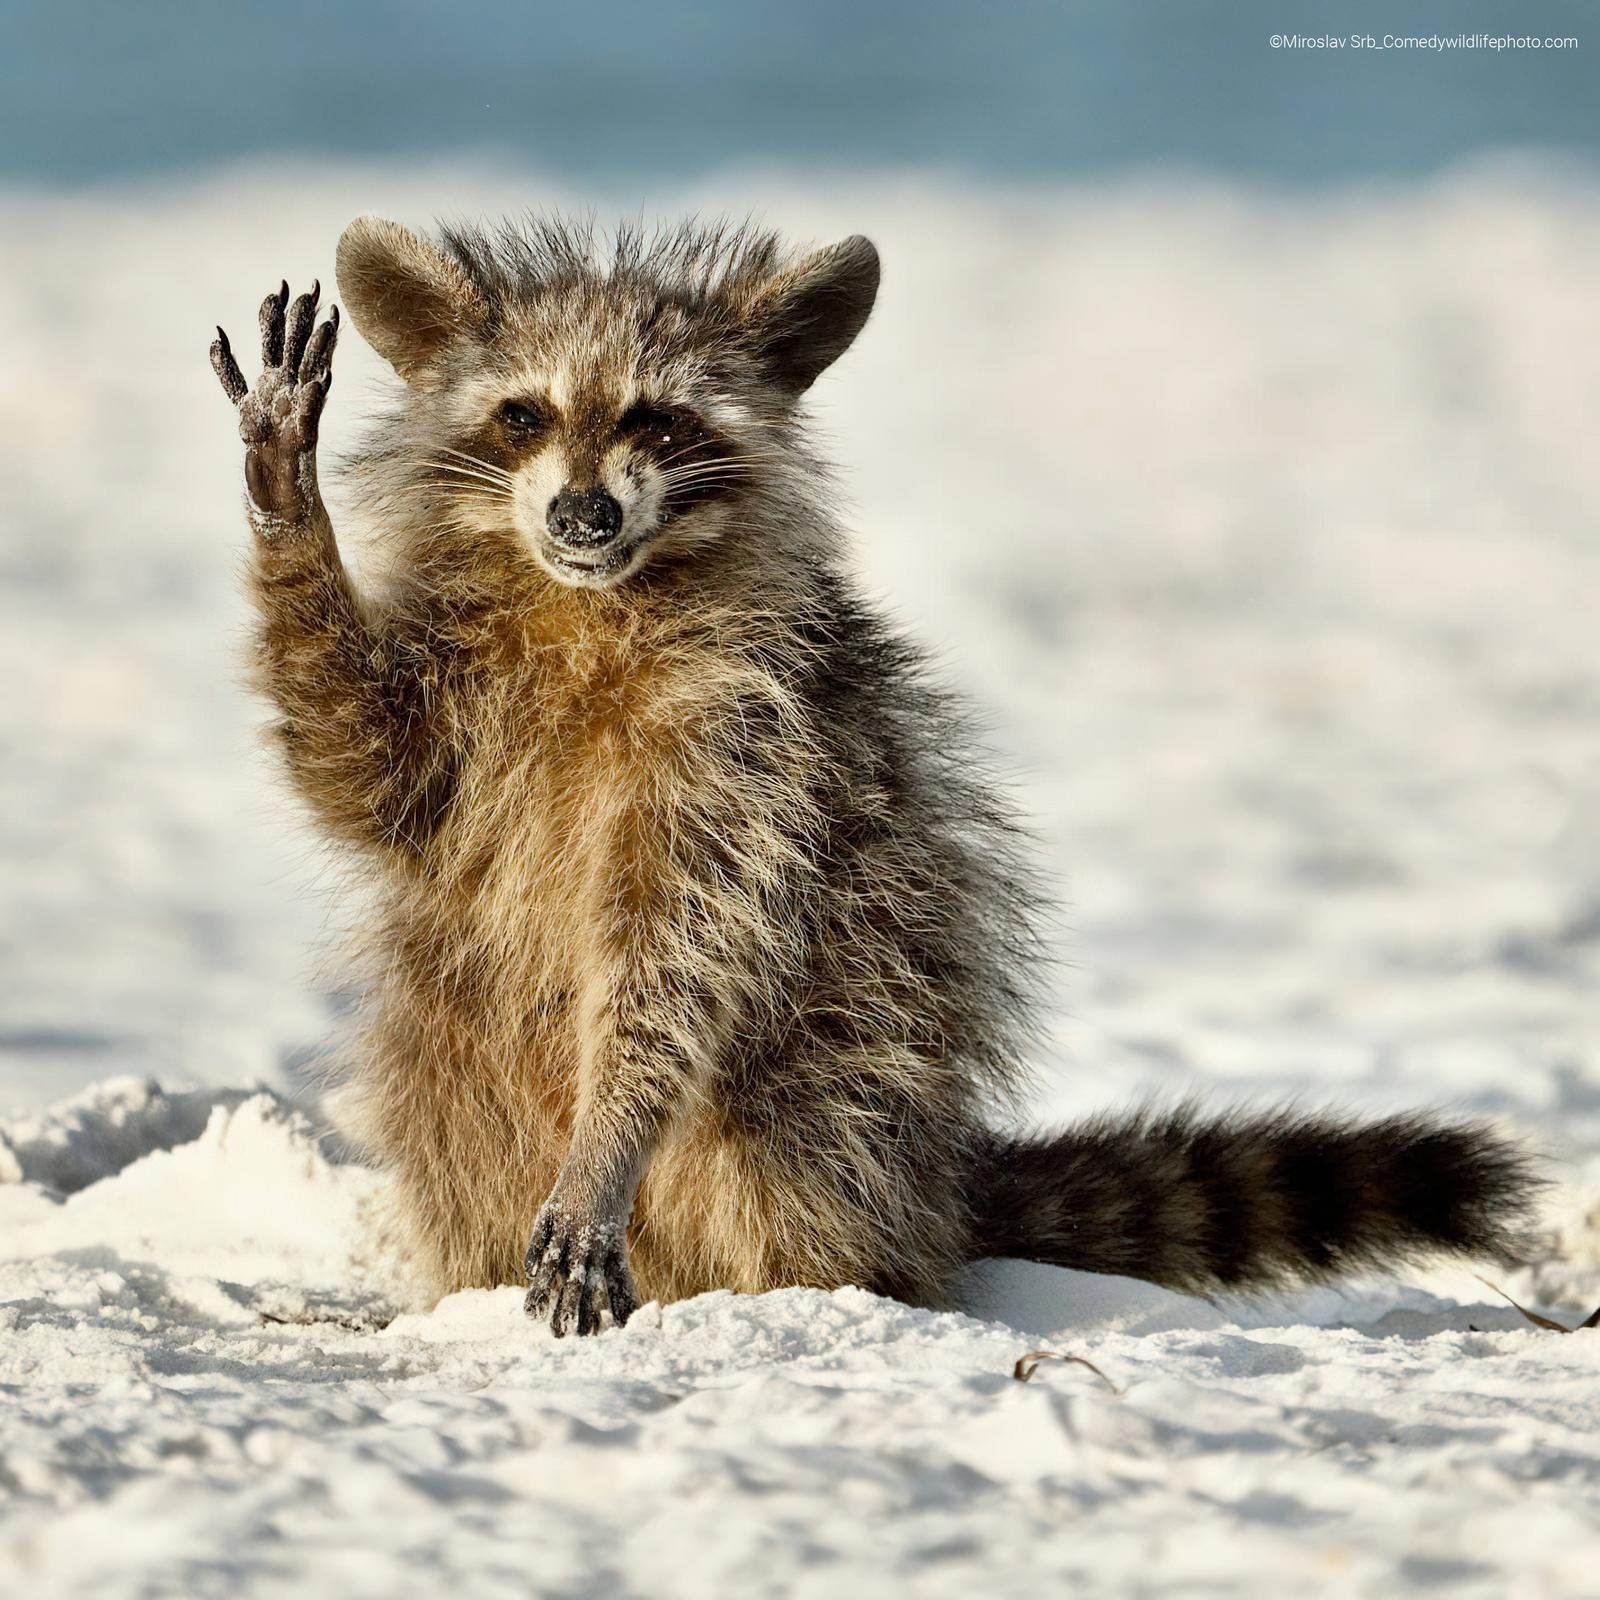 Funny Wildlife photo of a raccoon